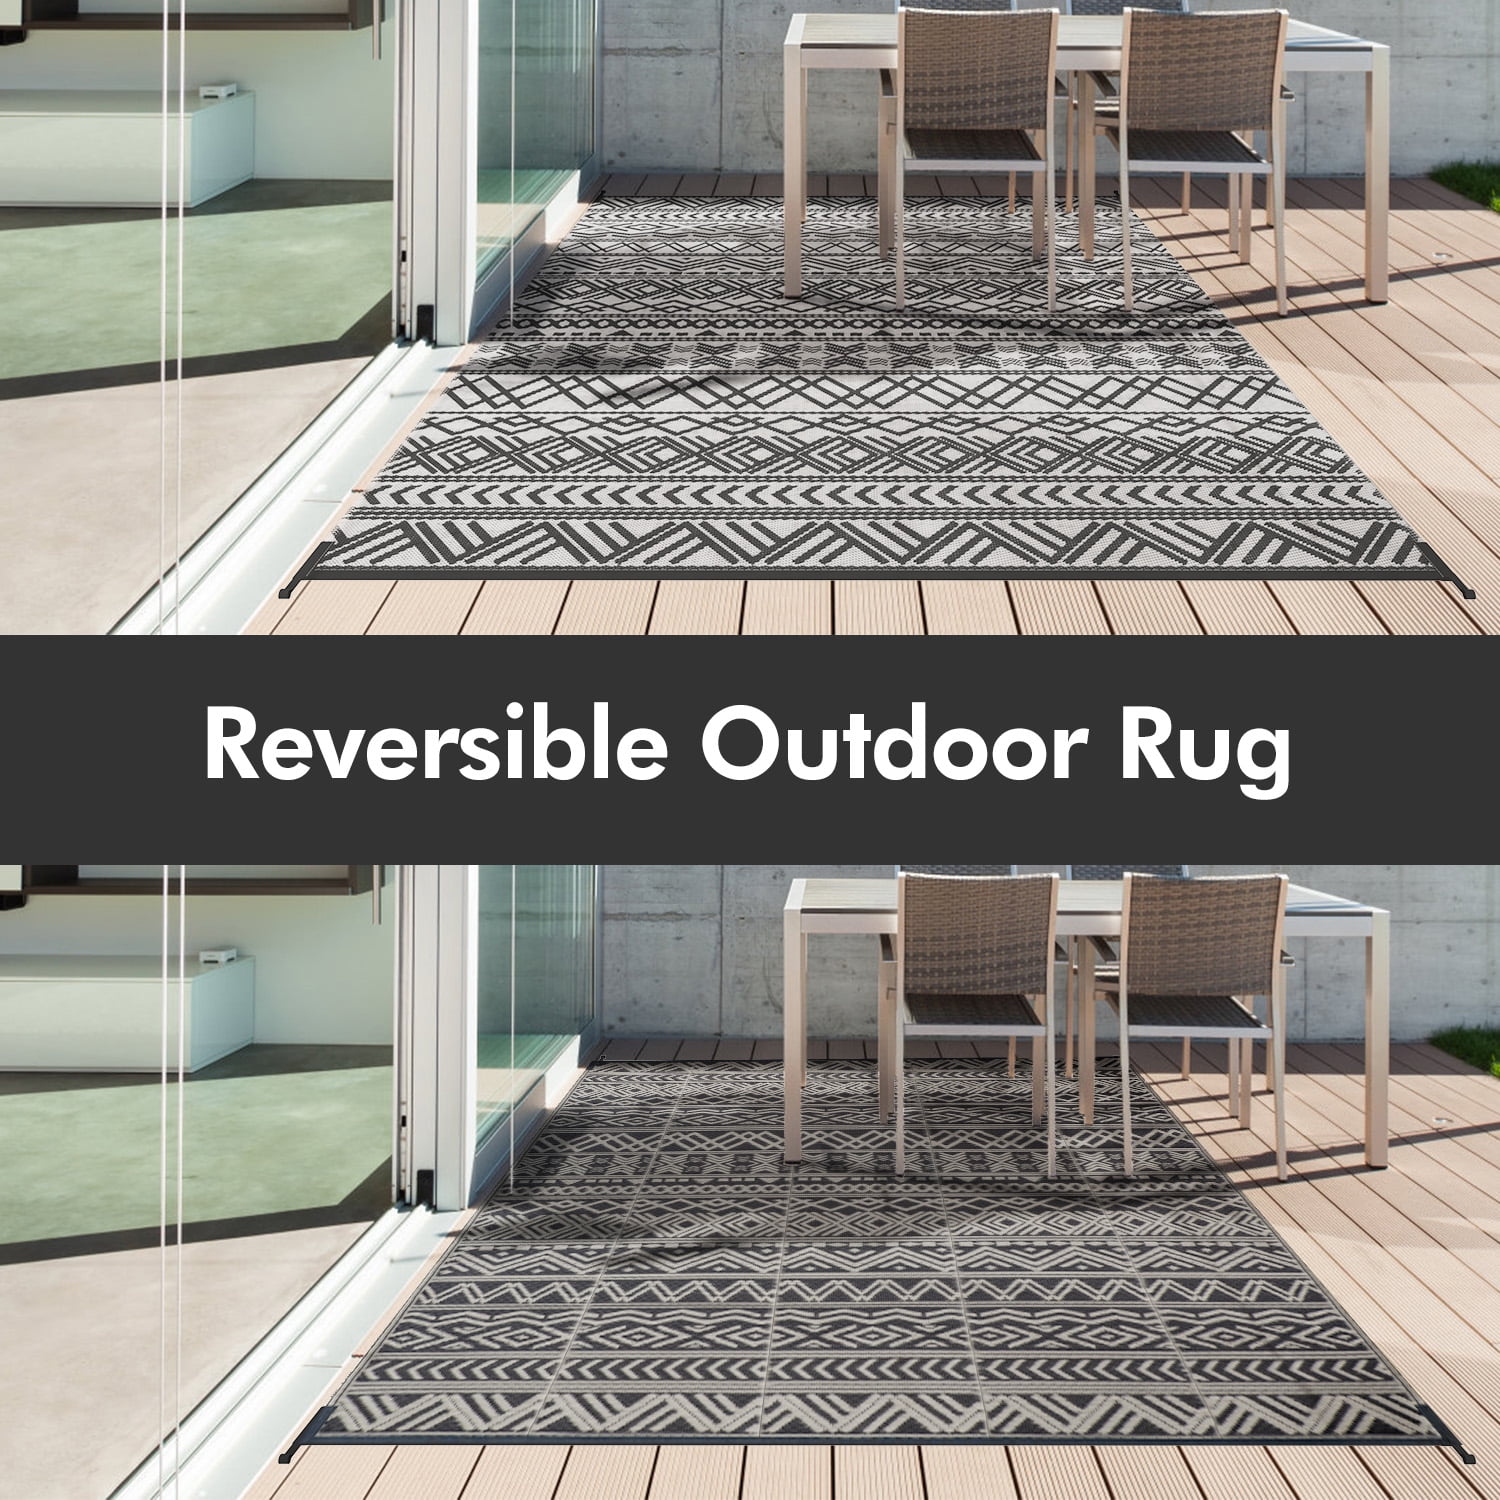 MeyJey Outdoor Rugs, 6'x9' Reversible Outdoor Area Rug, Plastic Waterproof  Floor Mat for Patio Camping RV Picnic Backyard Deck Balcony Porch Beach,  Gray 